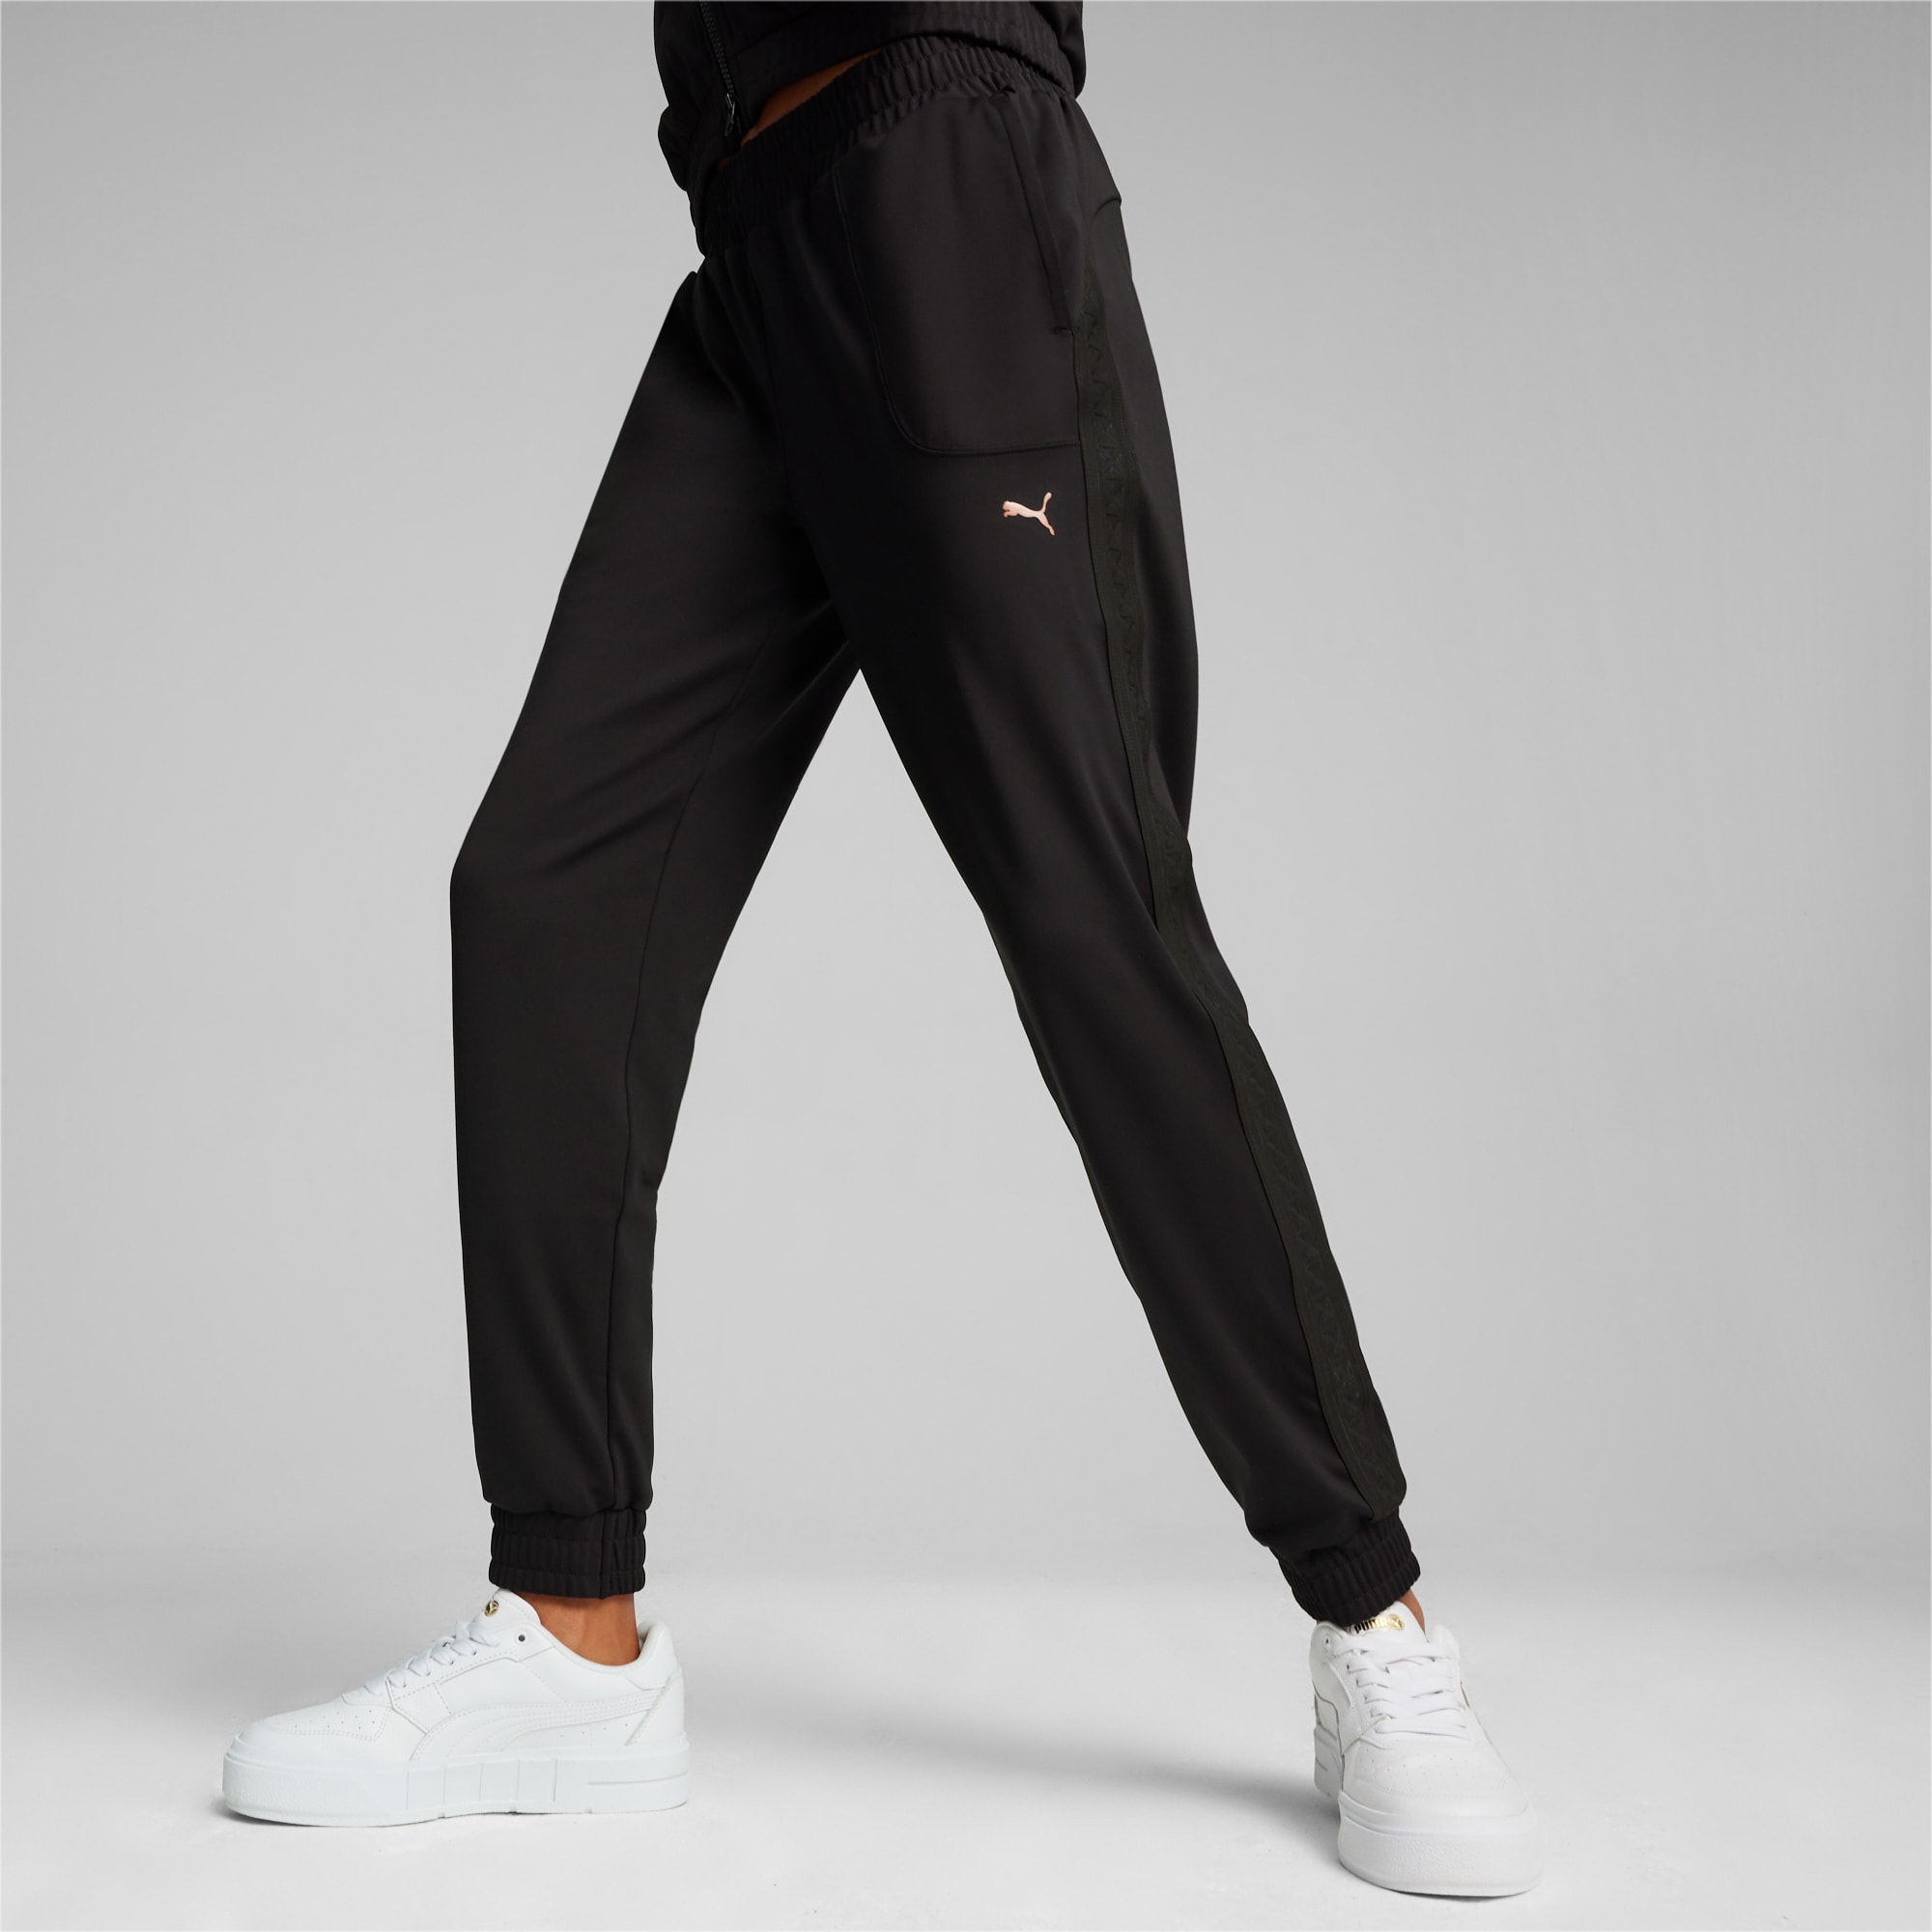 PUMA X Pamela Reif Women's Tapered Sweatpants, Black, Size XS, Clothing